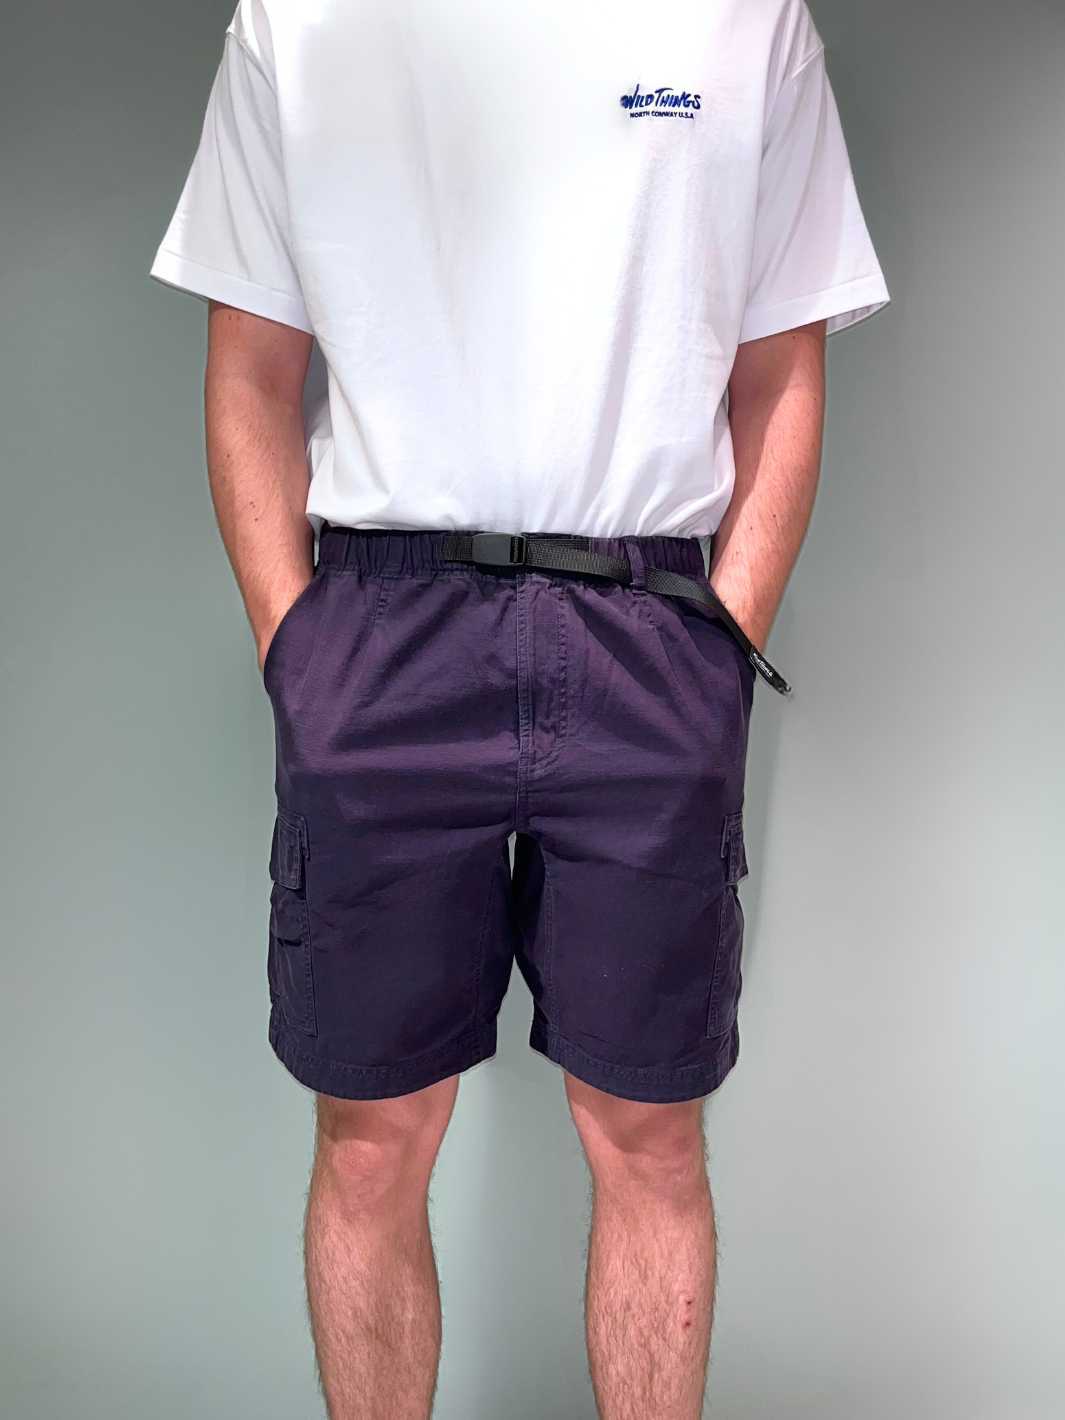 Wild Things Shorts Shorts | Cotton Cargo Shorts Navy